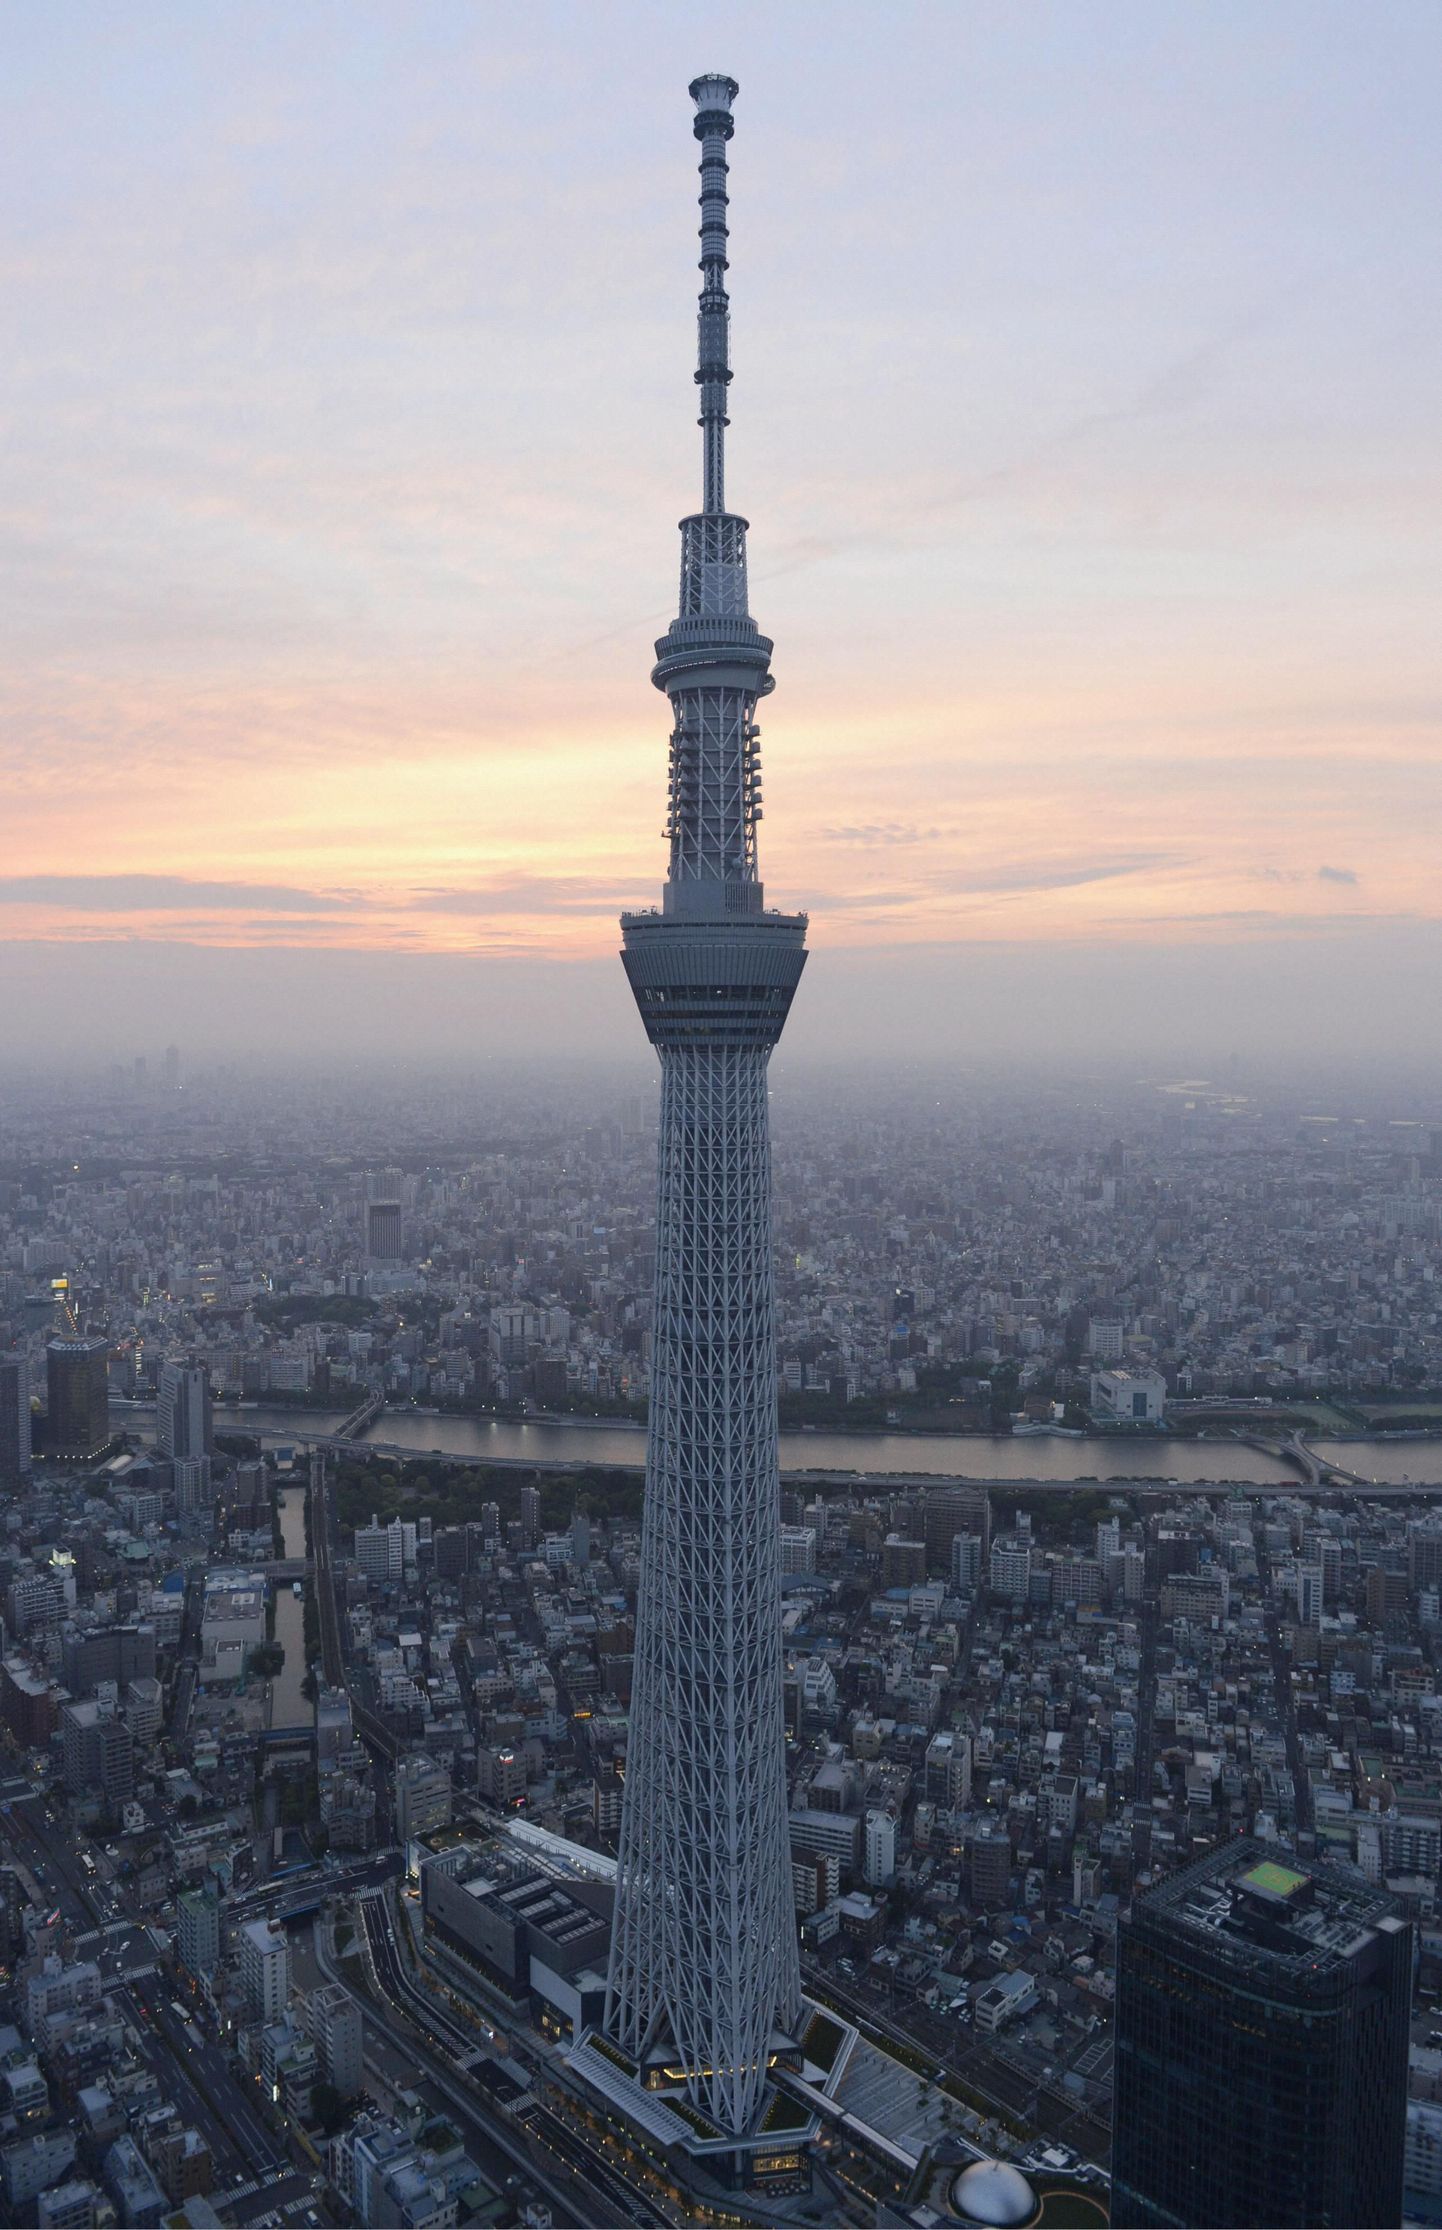 Tokyo Skytree torn